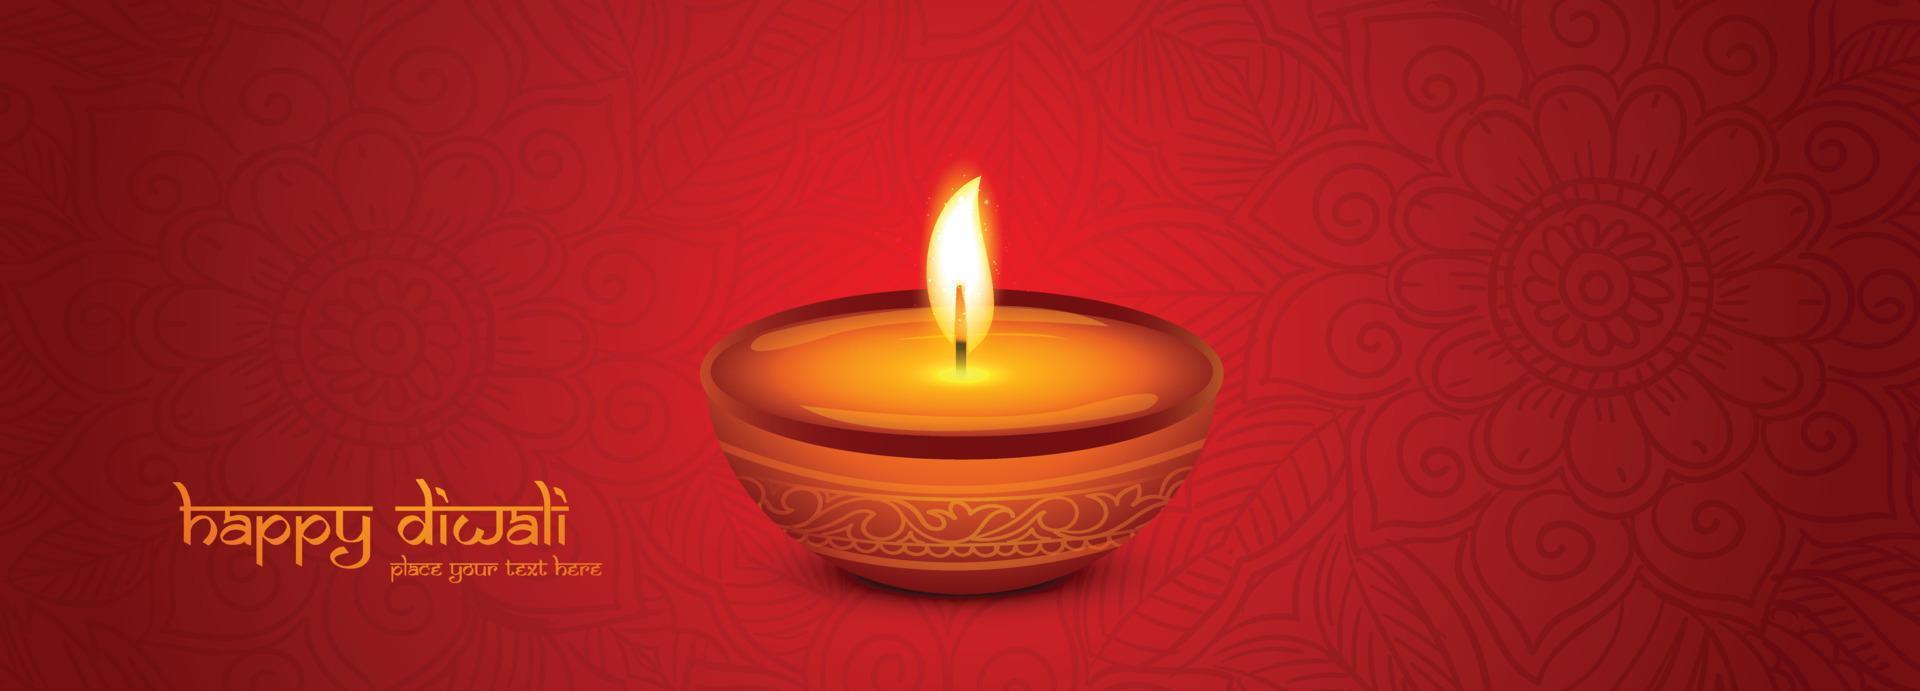 Happy diwali festival of light with oil lamp celebration banner background vector